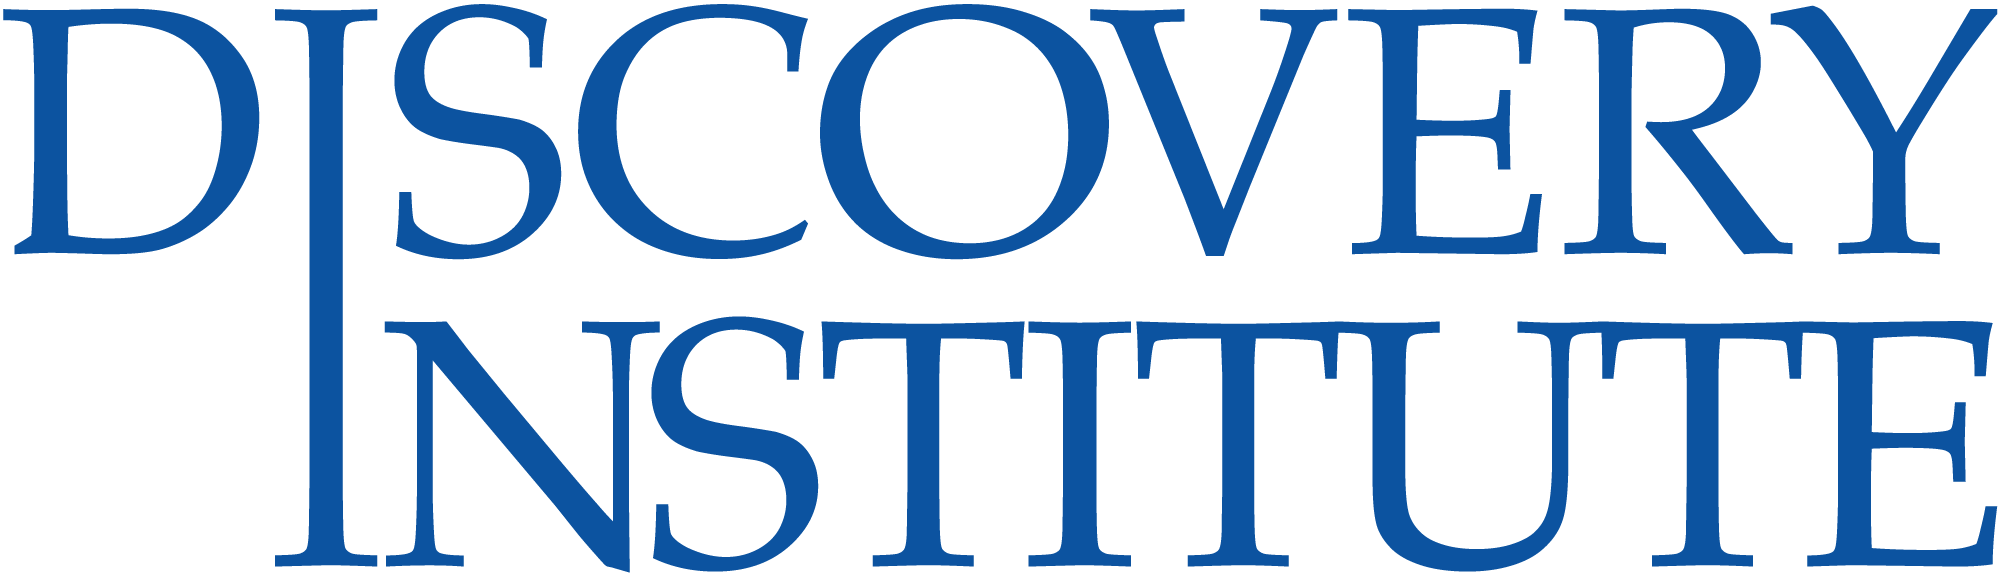 Discovery Institute  logo